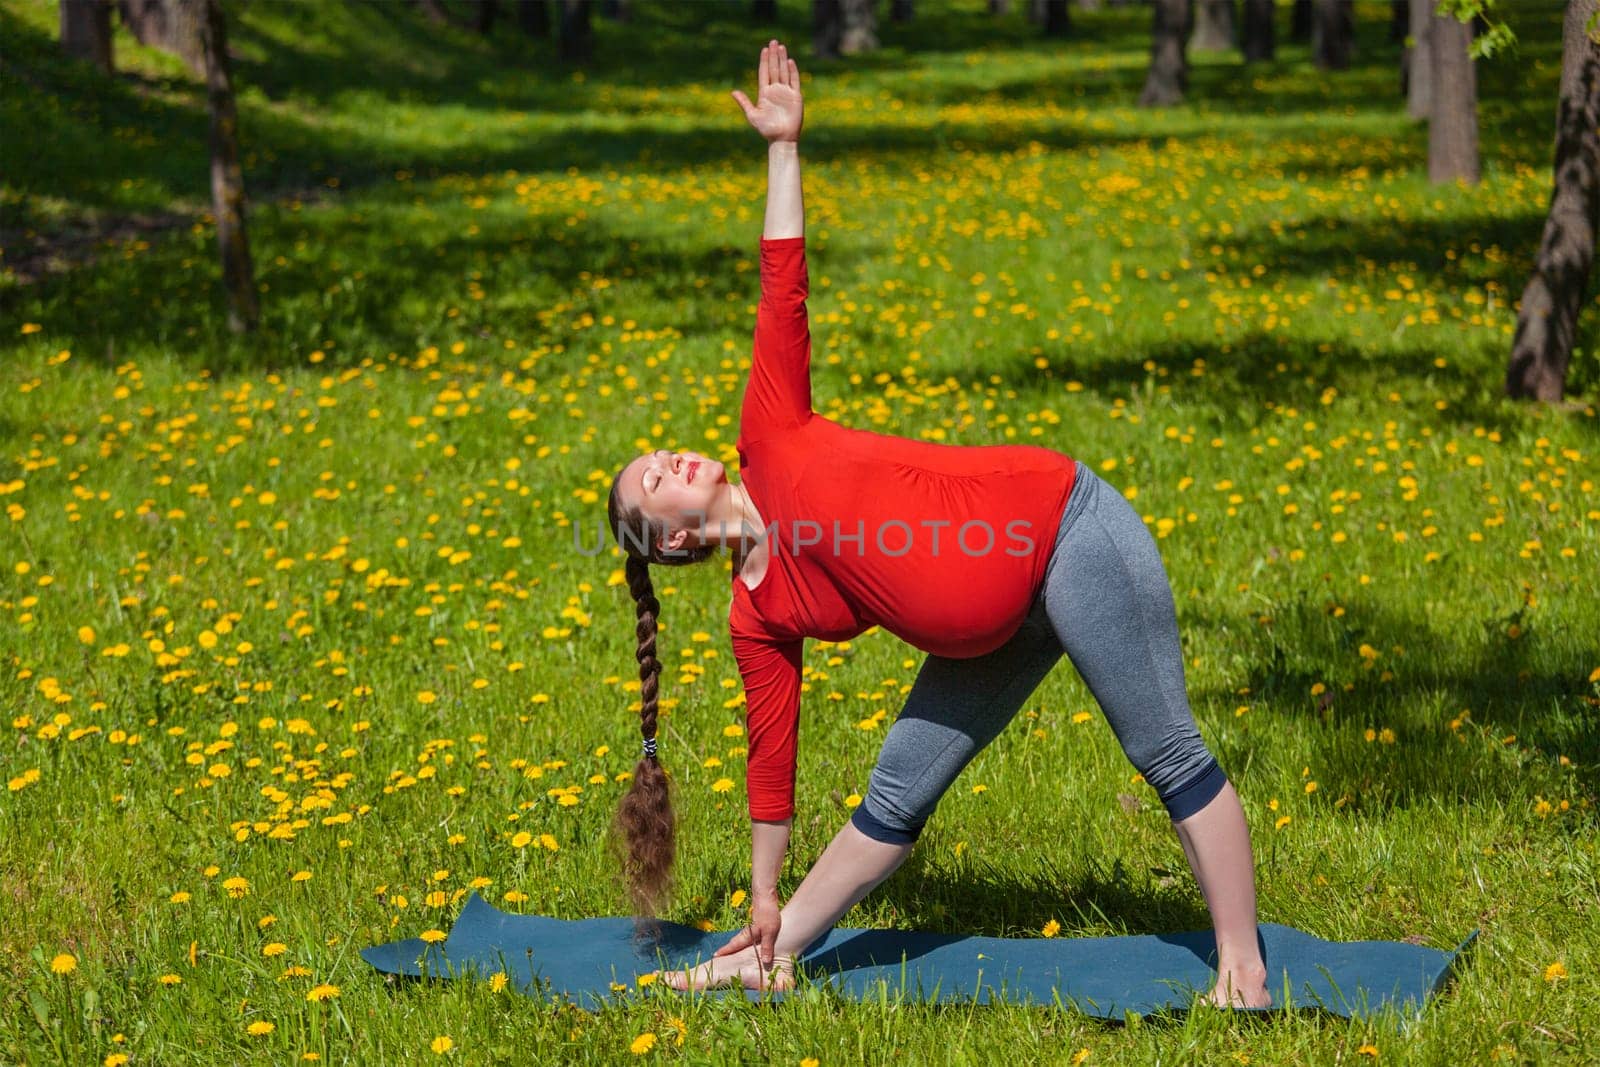 Pregnancy yoga exercise - pregnant woman doing asana Utthita trikonasana outdoors on grass in summer